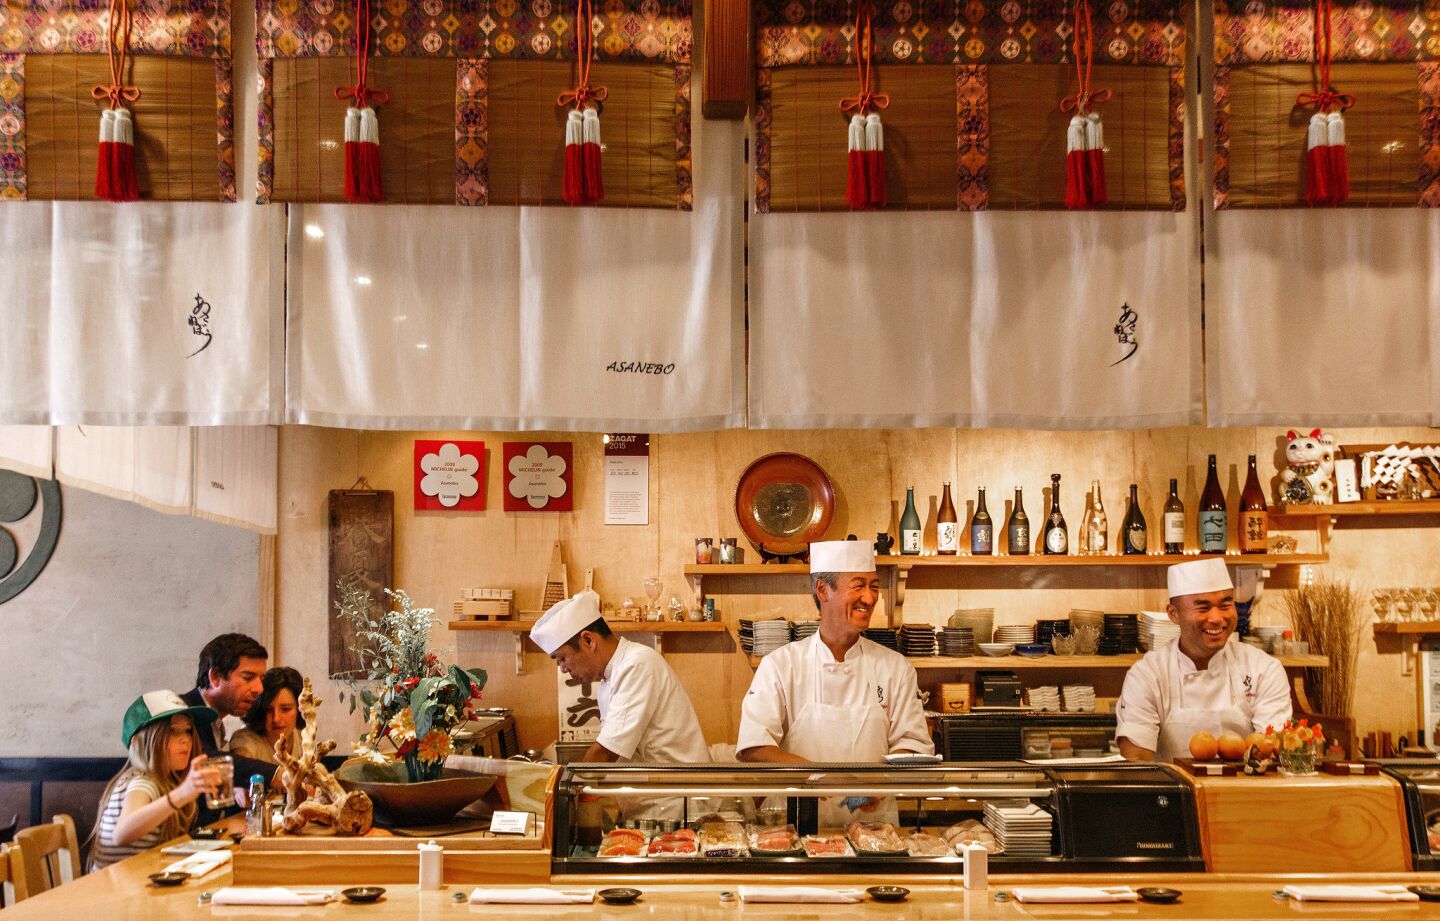 Chef Tetsuya Nakao, center, shares a laugh behind the counter.